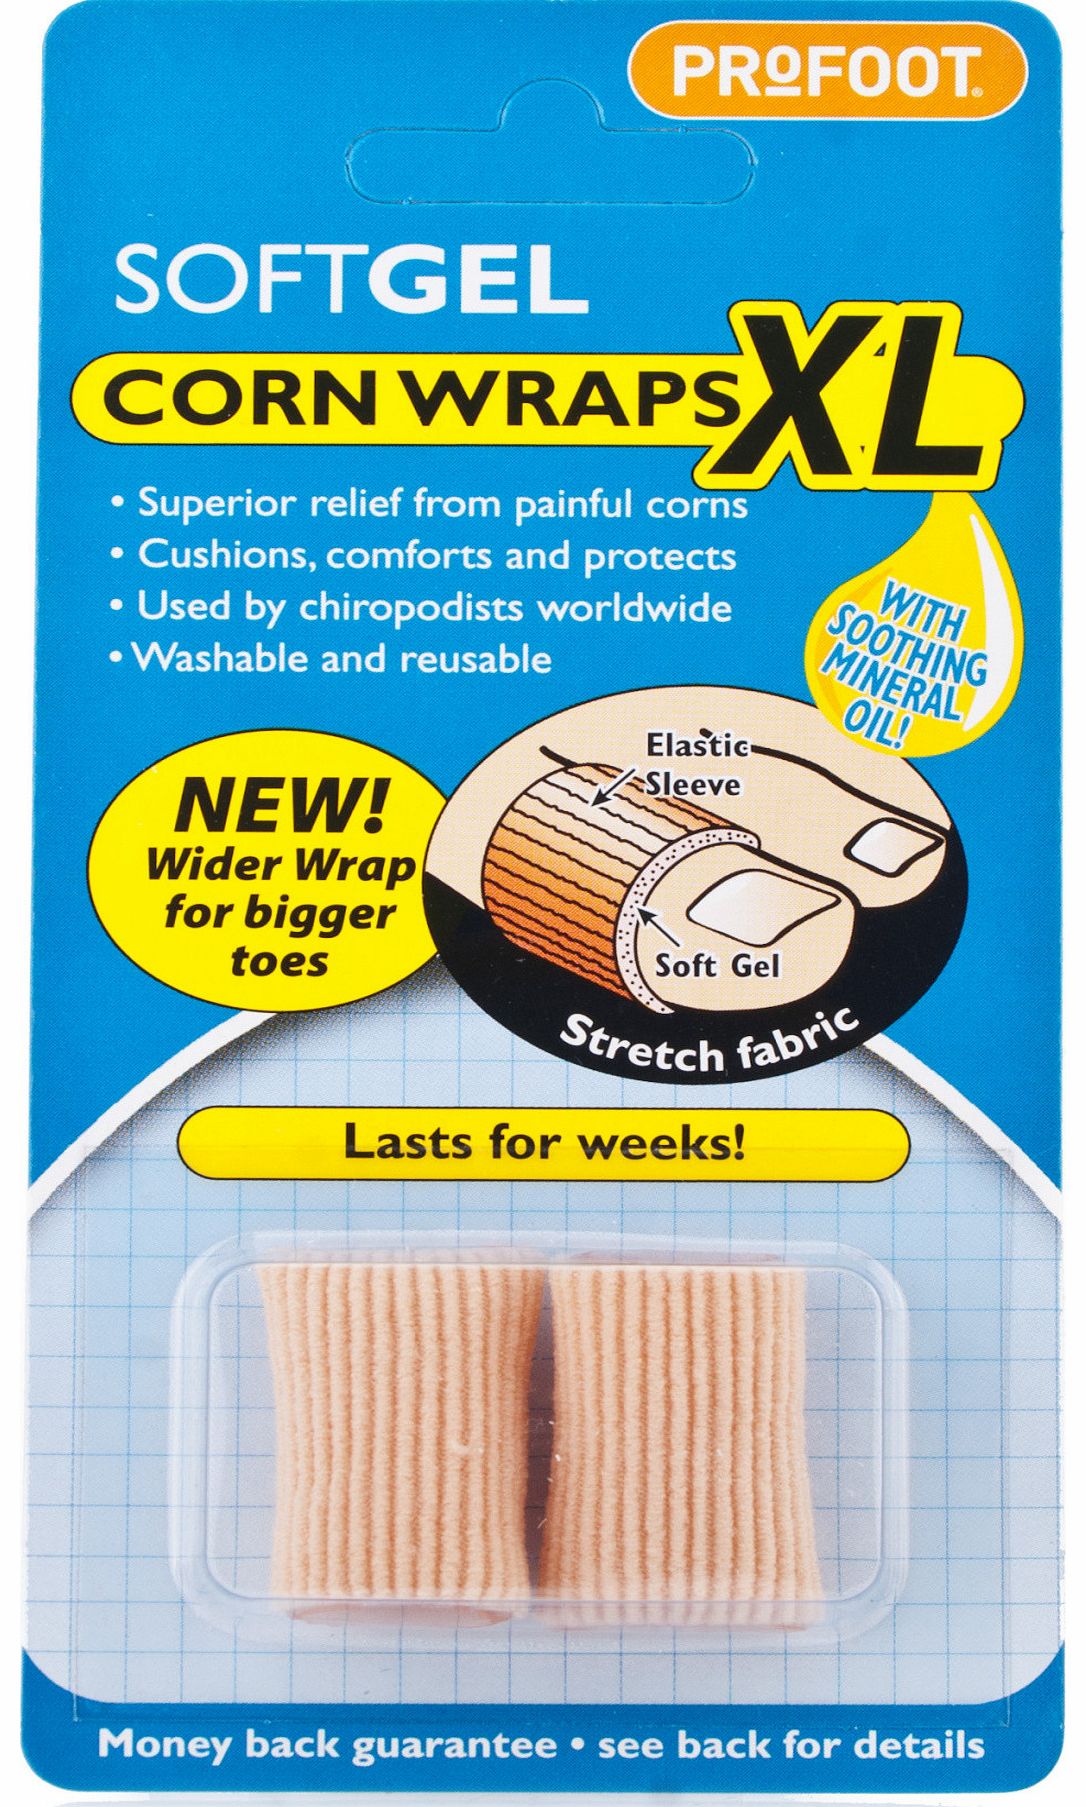 Pro-Kolin Profoot Soft Gel Corn Wraps XL